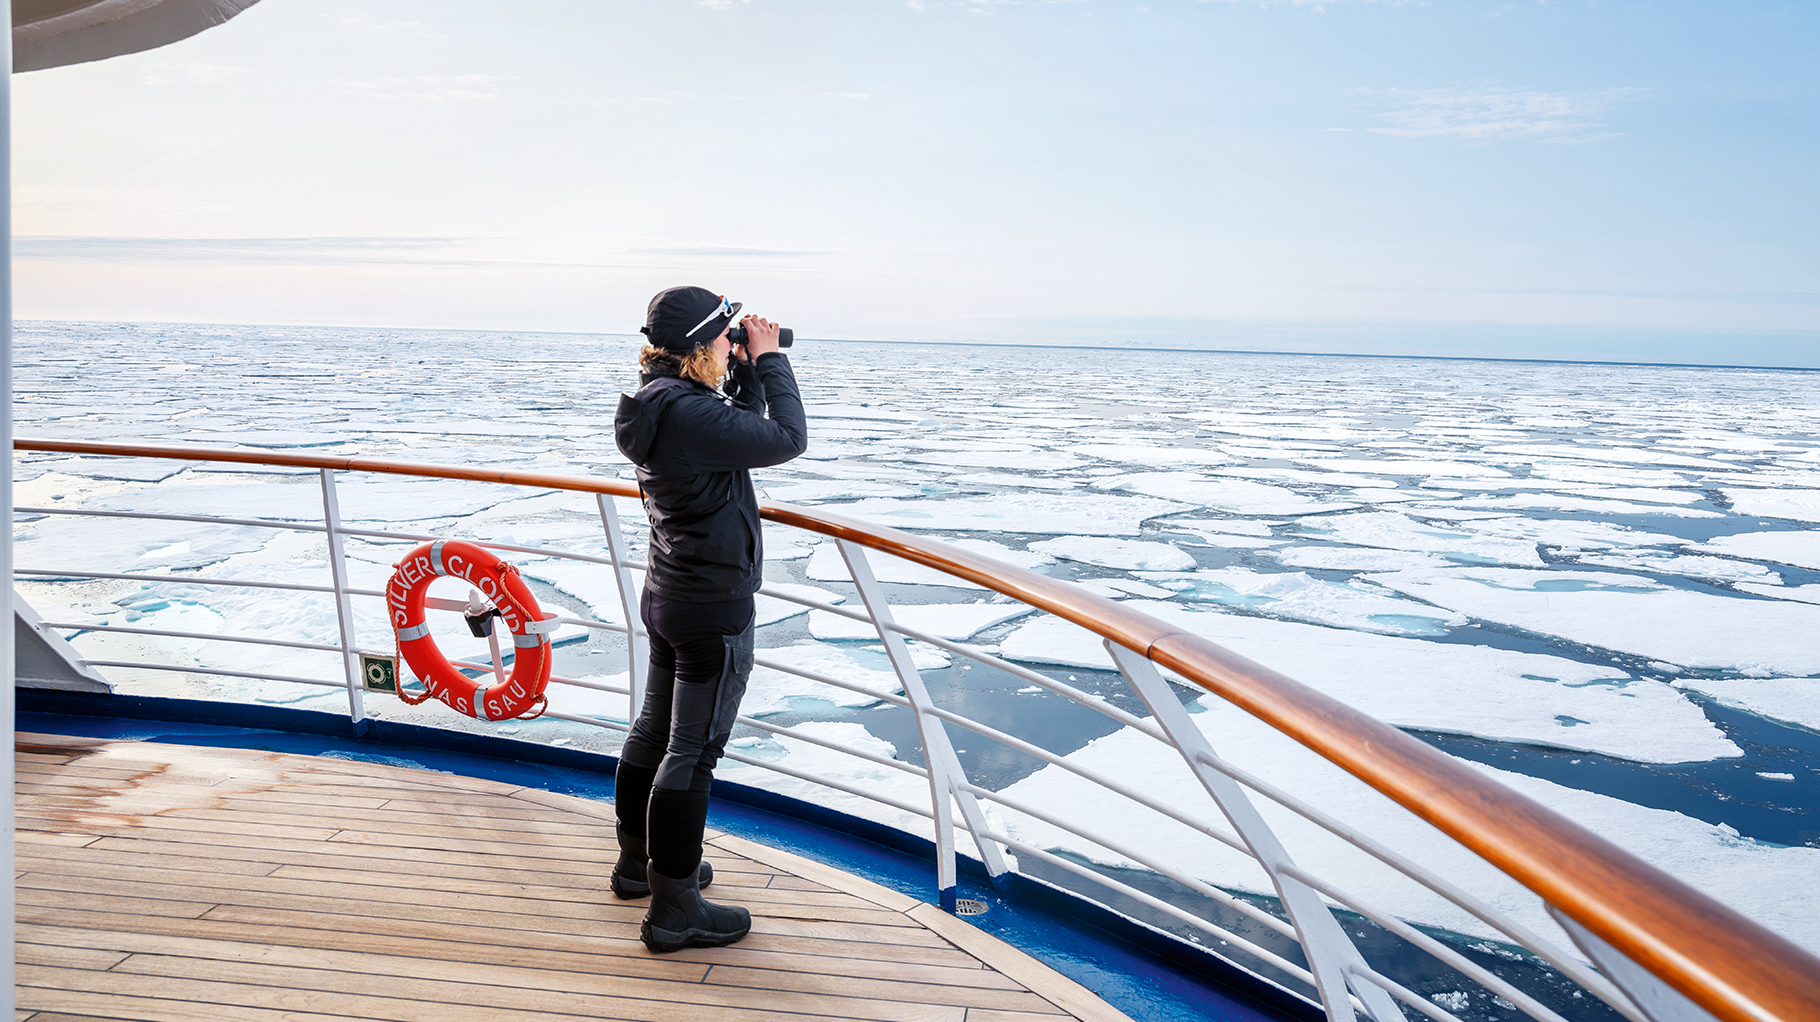 Lines like Silversea visit remote destinations like Antarctica